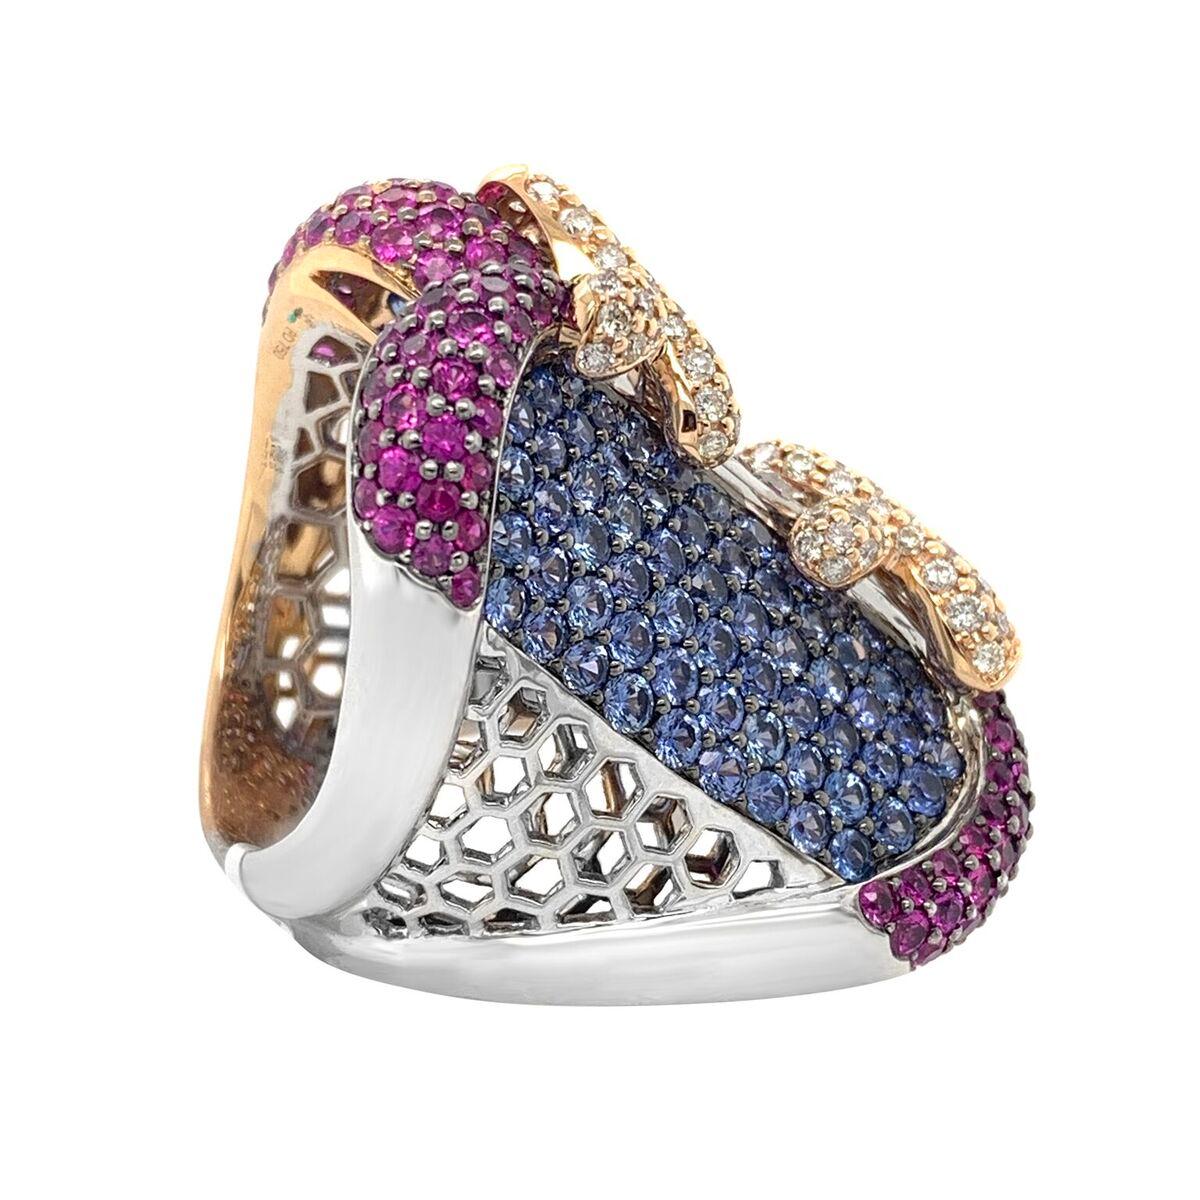 Designer: Zorab
Metal: 18k Palladium
Ring Size: 8
Gemstone: Sapphire, Diamond
Sapphire Weight: 6.09 CT
Pink Sapphire Weight: 4.16 CT
Diamond Weight: 1.24 CT
CSR1097